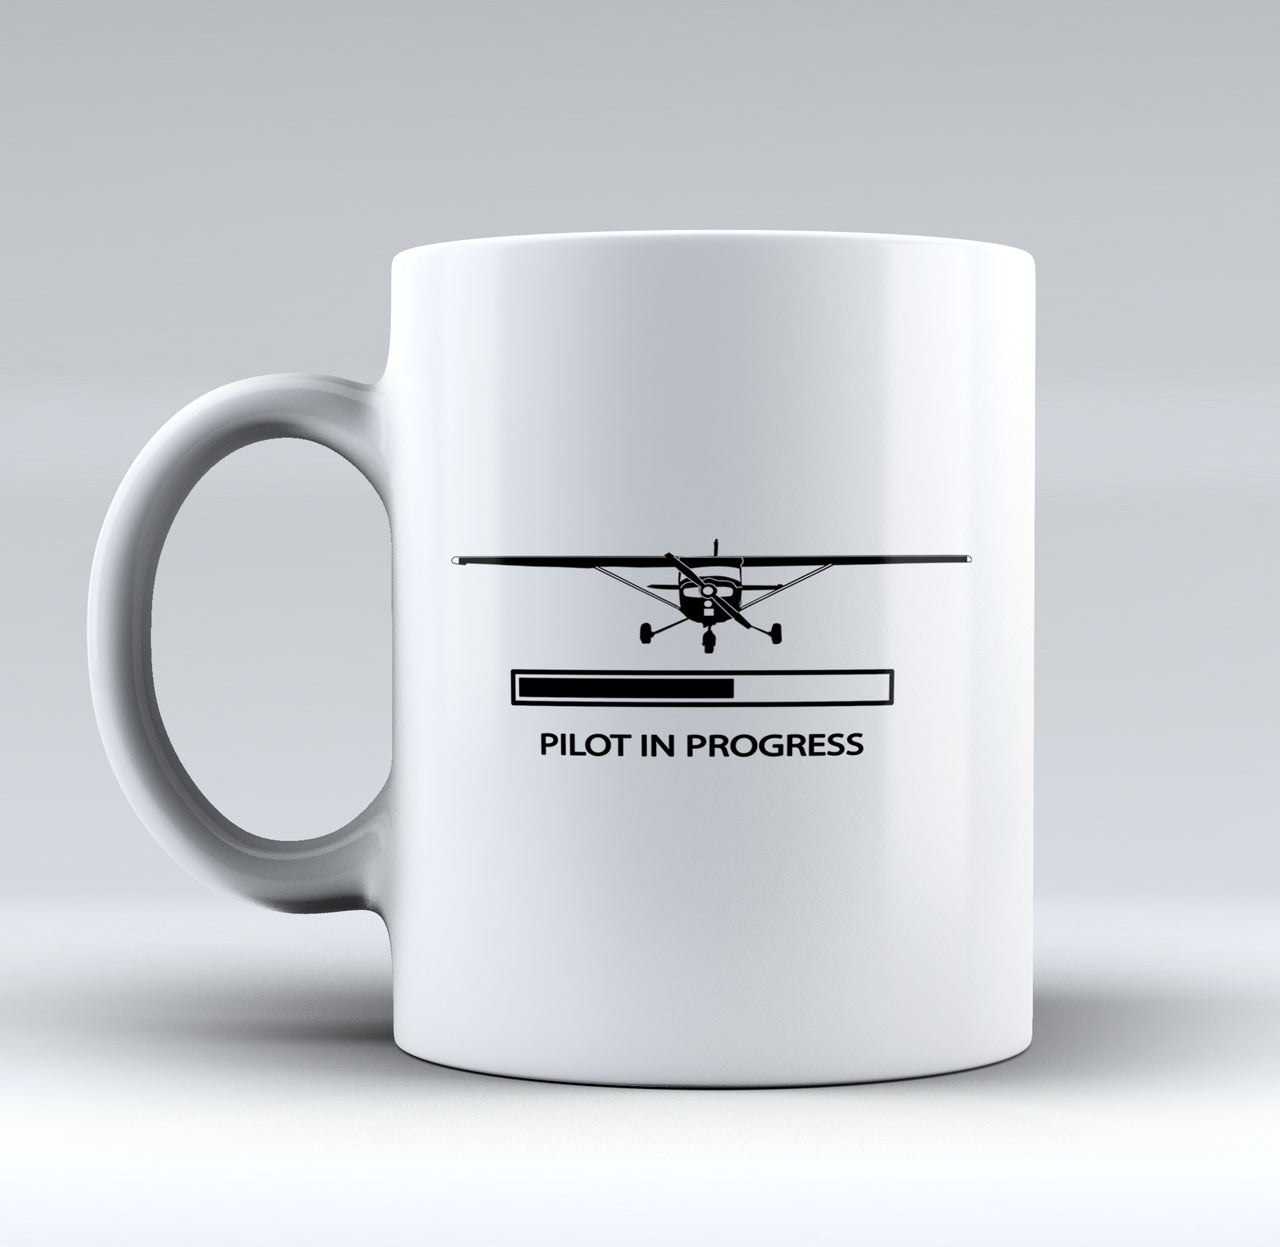 Pilot In Progress (Cessna) Designed Mugs